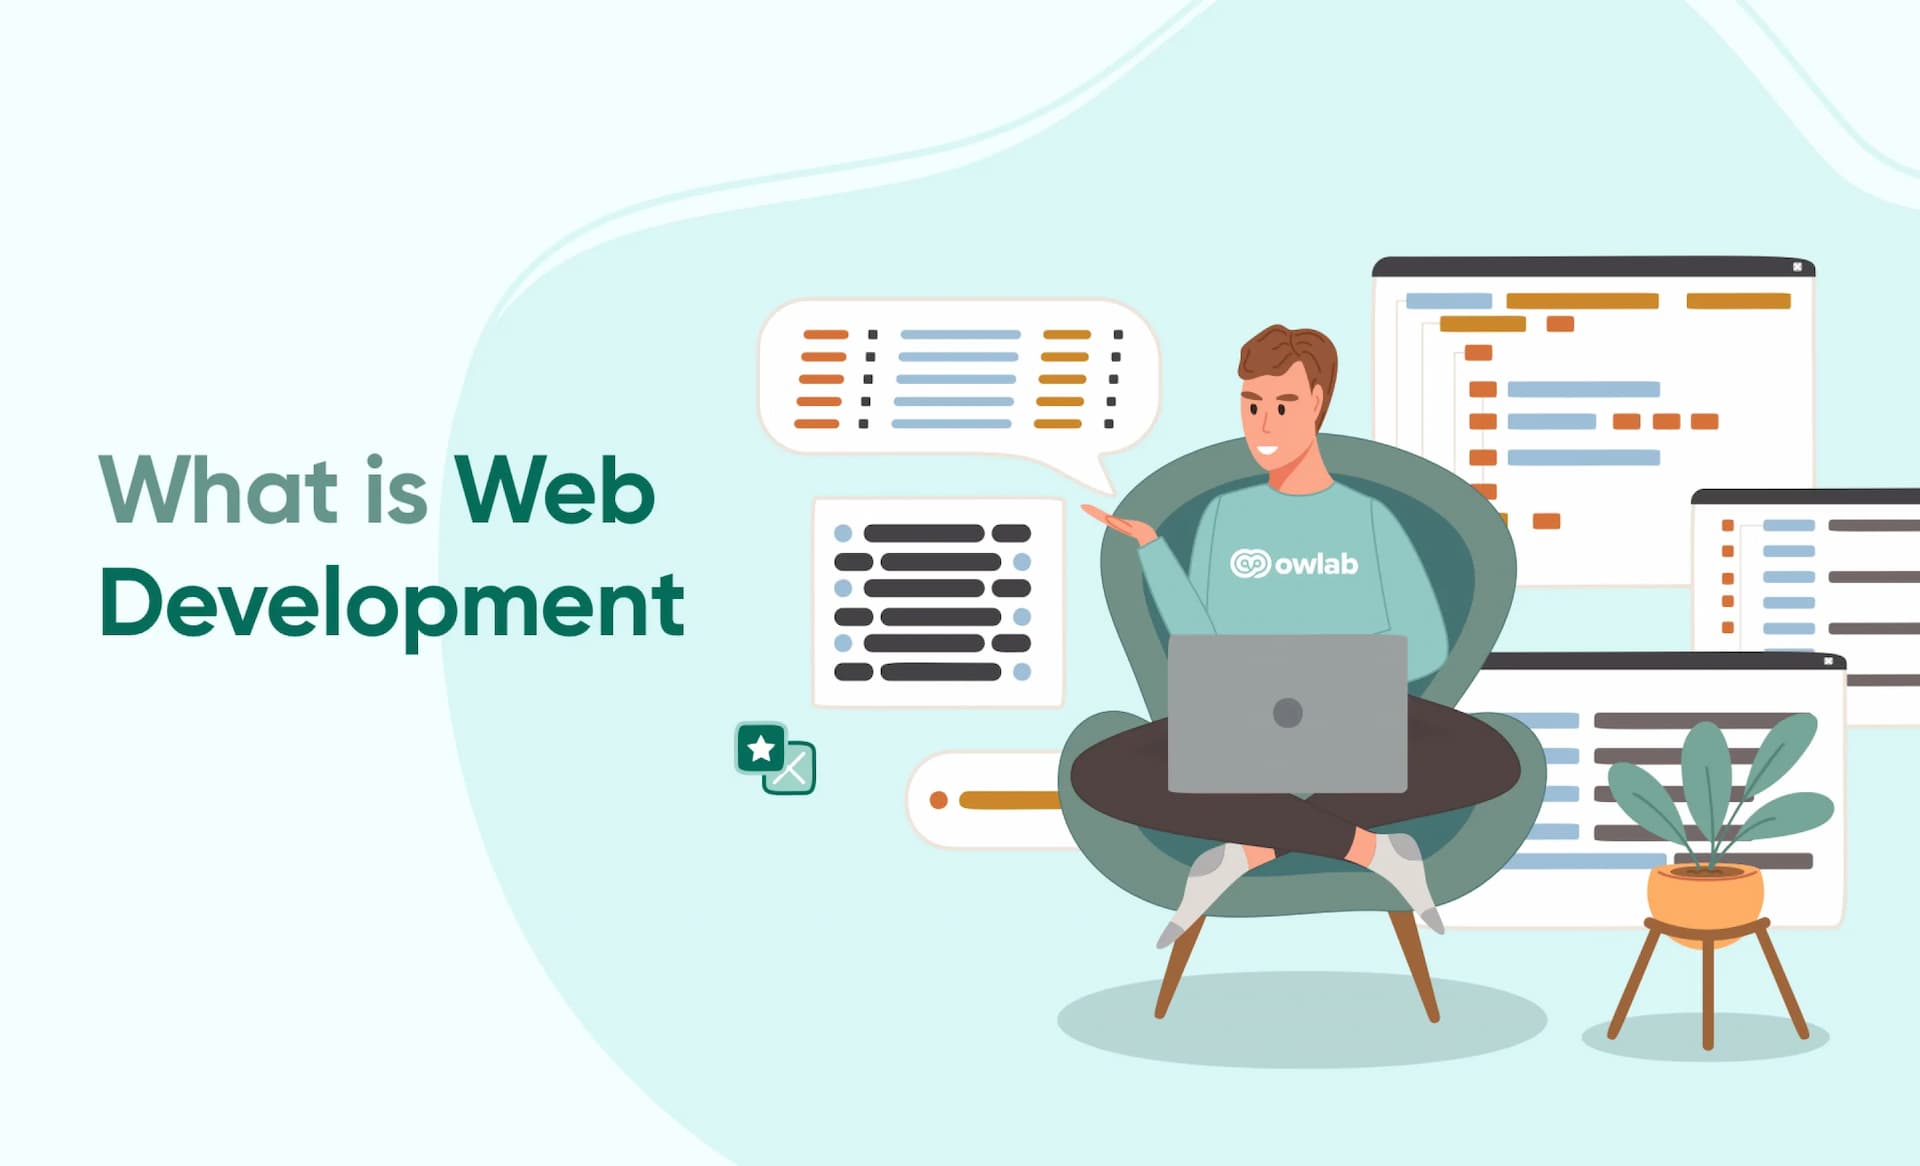 What is Web Development?